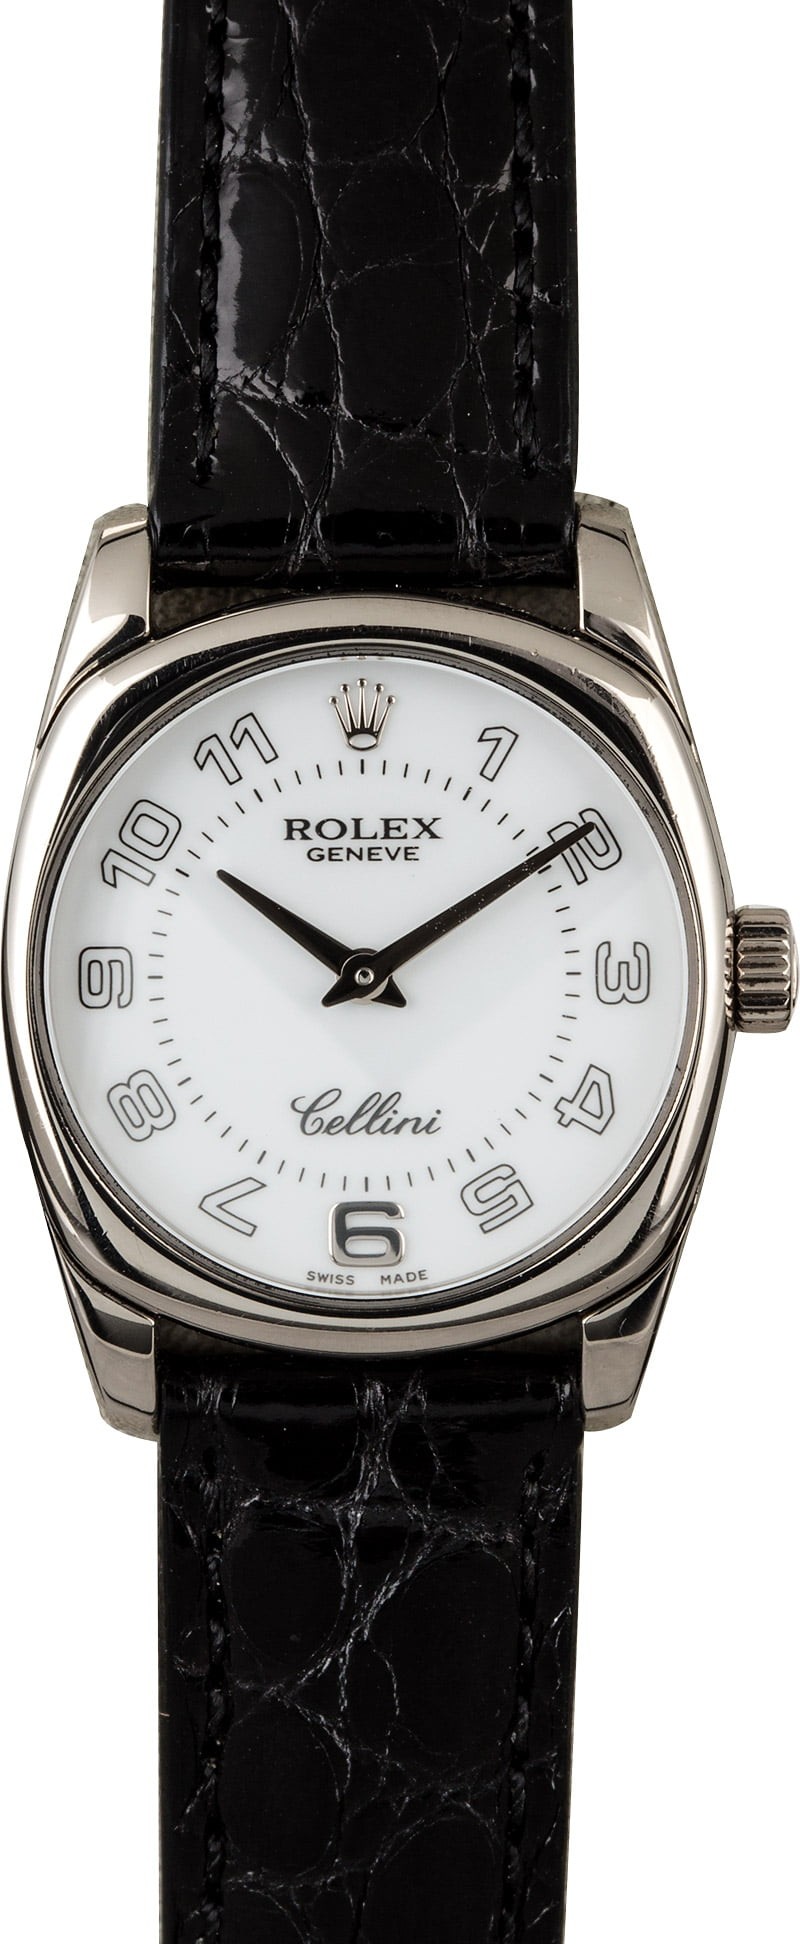 Designer Rolex Cellini Danaos 6229 White Gold Case WE03204